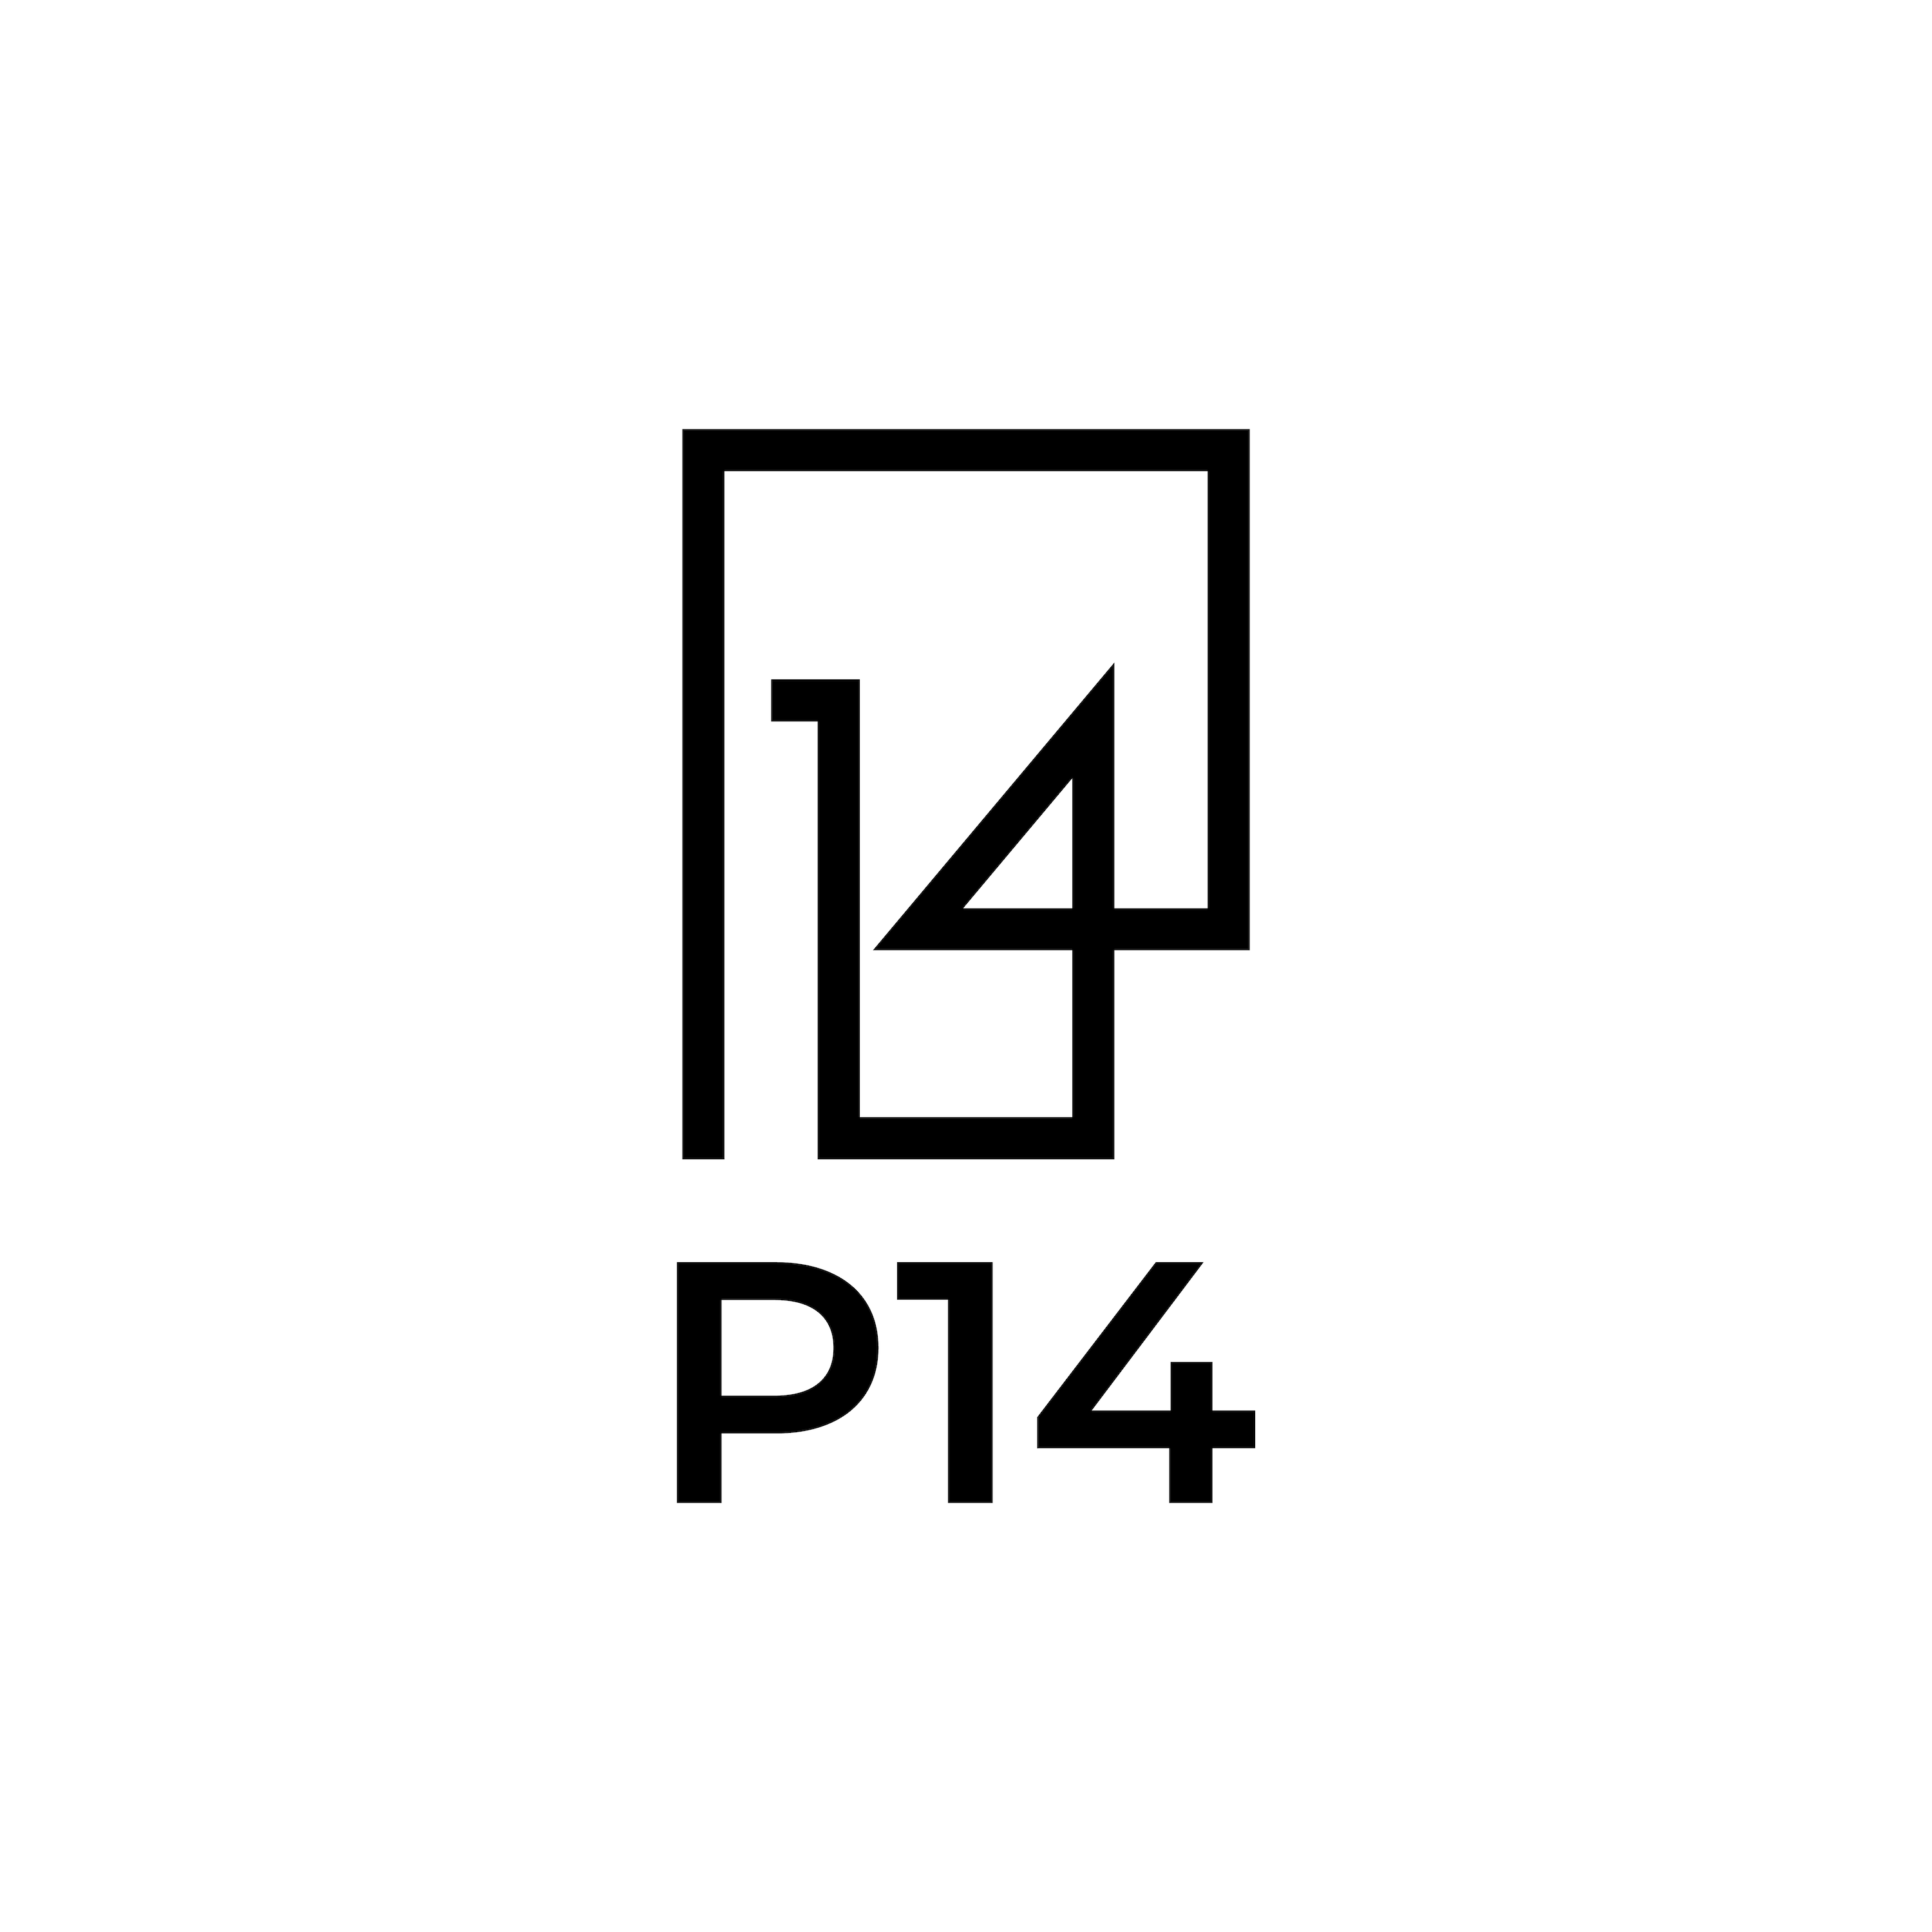 P14 Inc